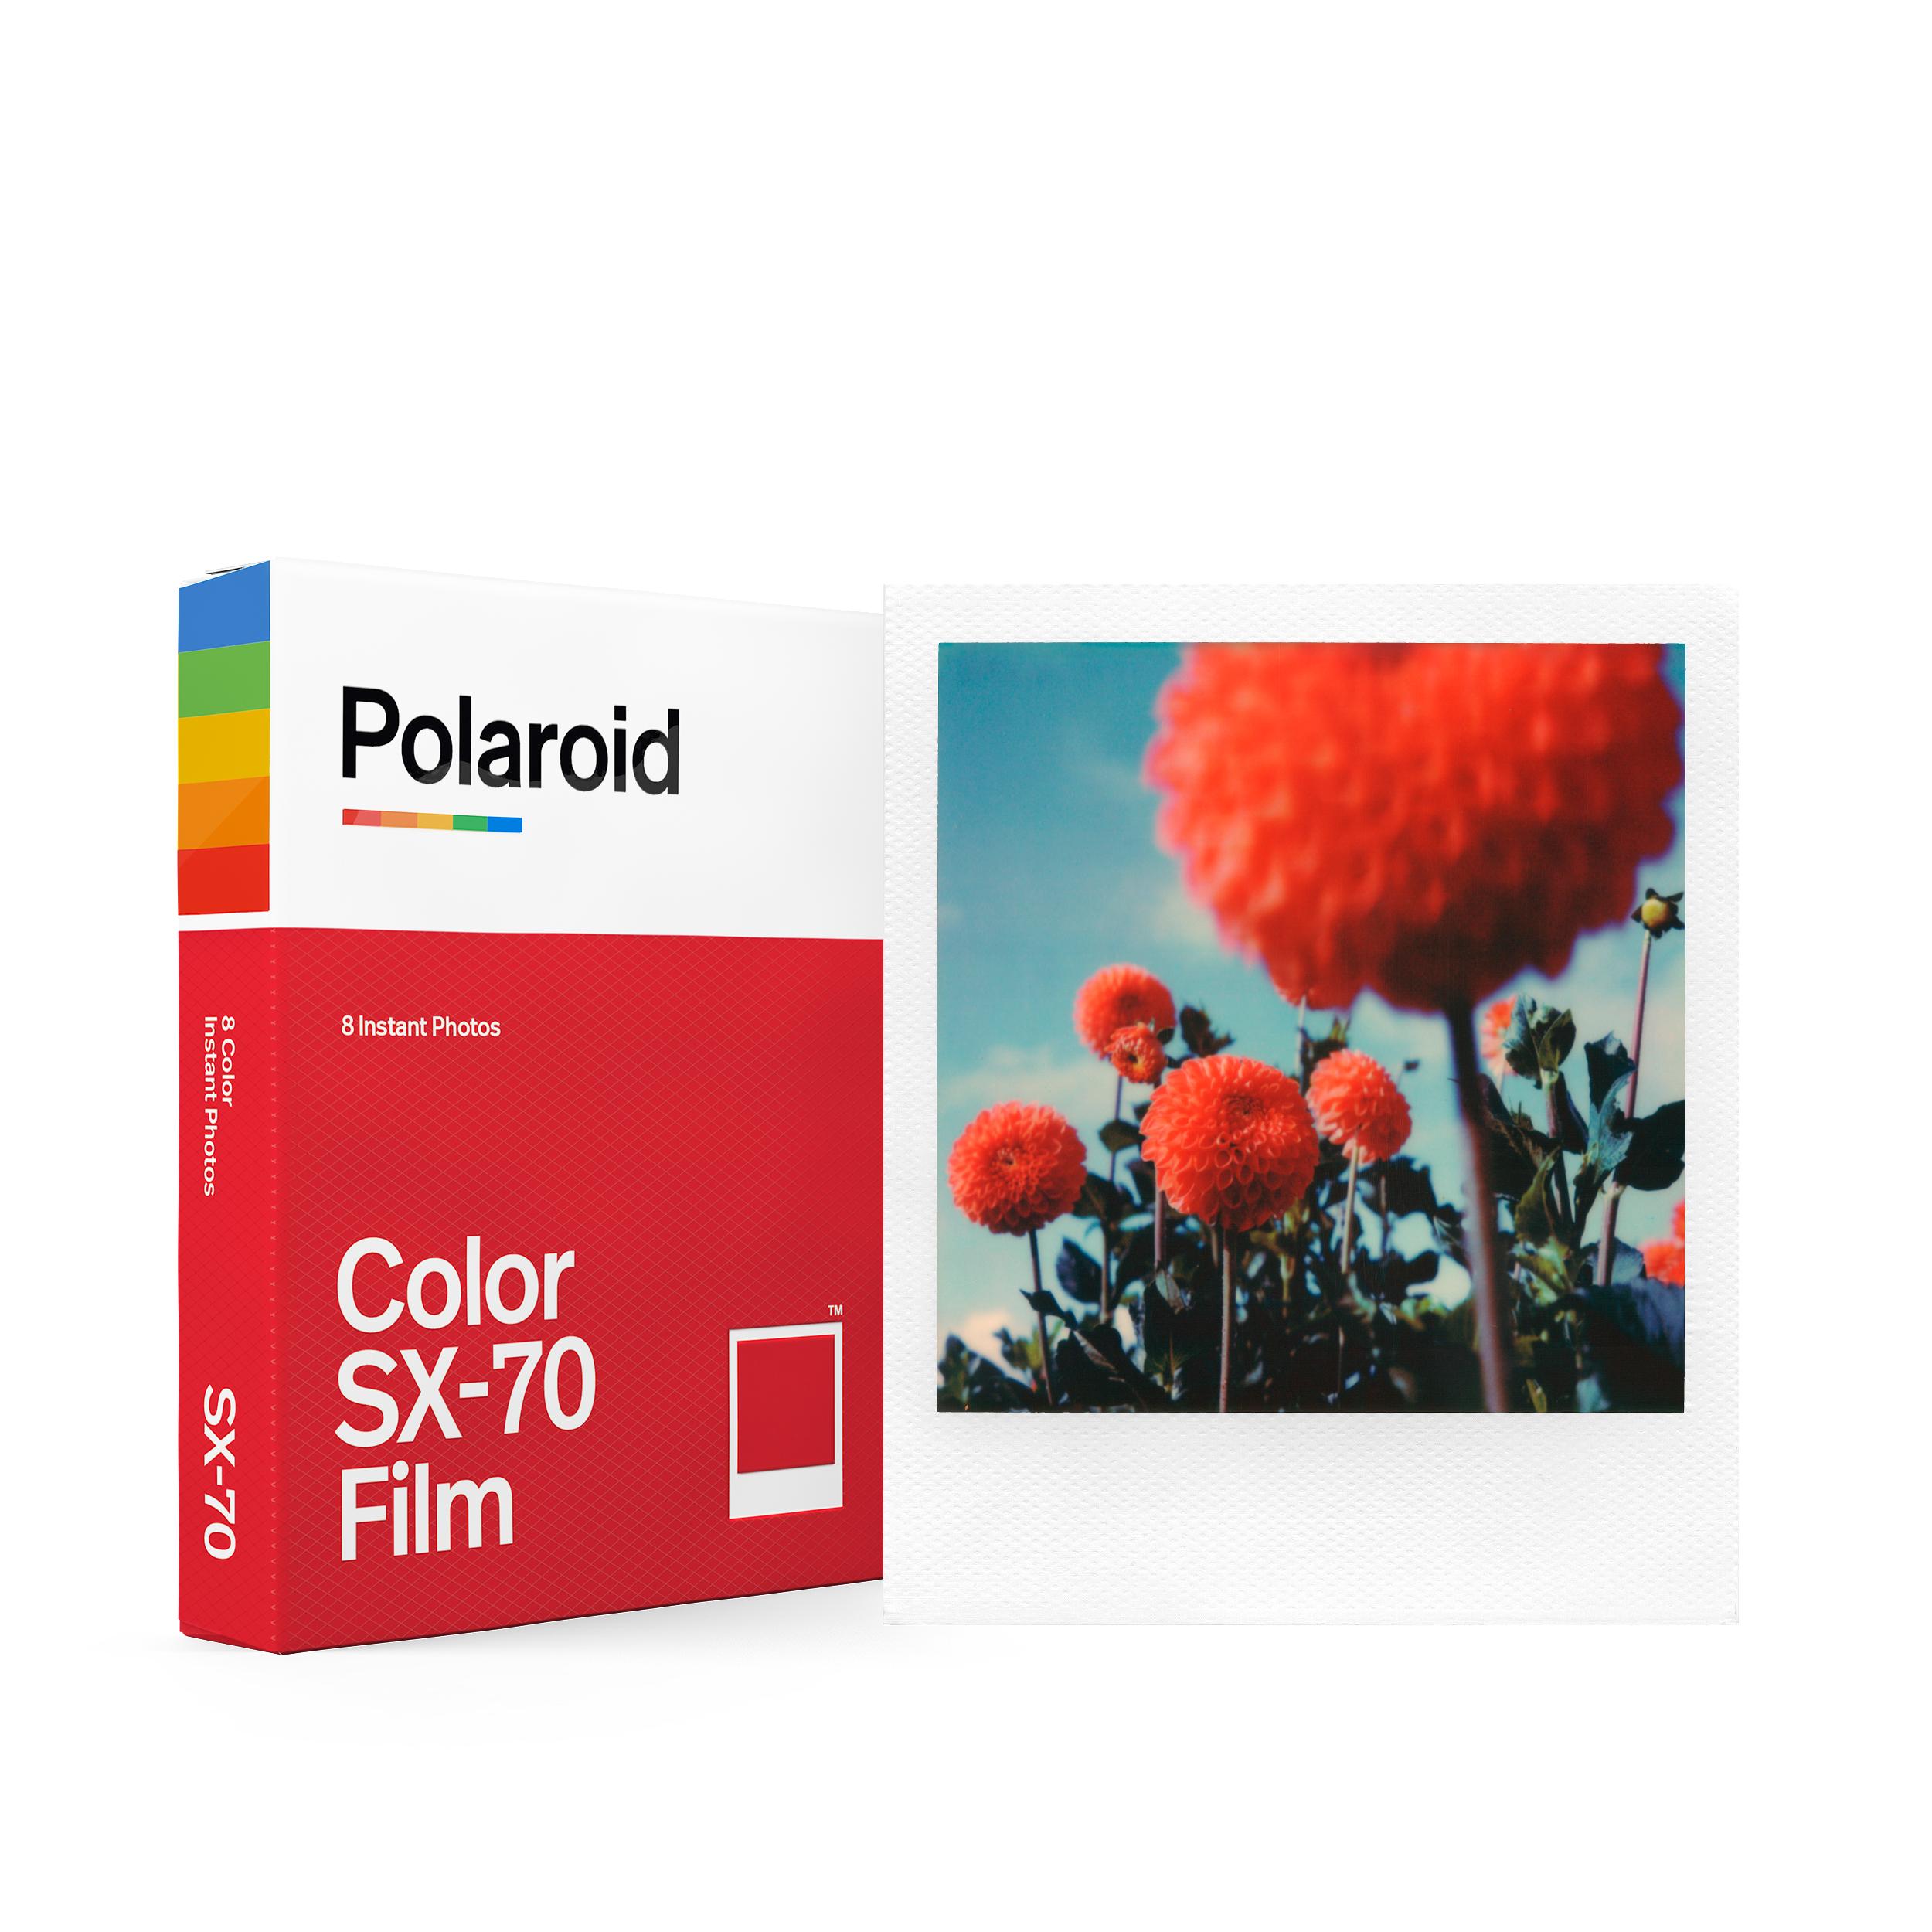 Sofortbildfilm weißer POLAROID Rahmen für Sofortbildfilm Farbe SX-70